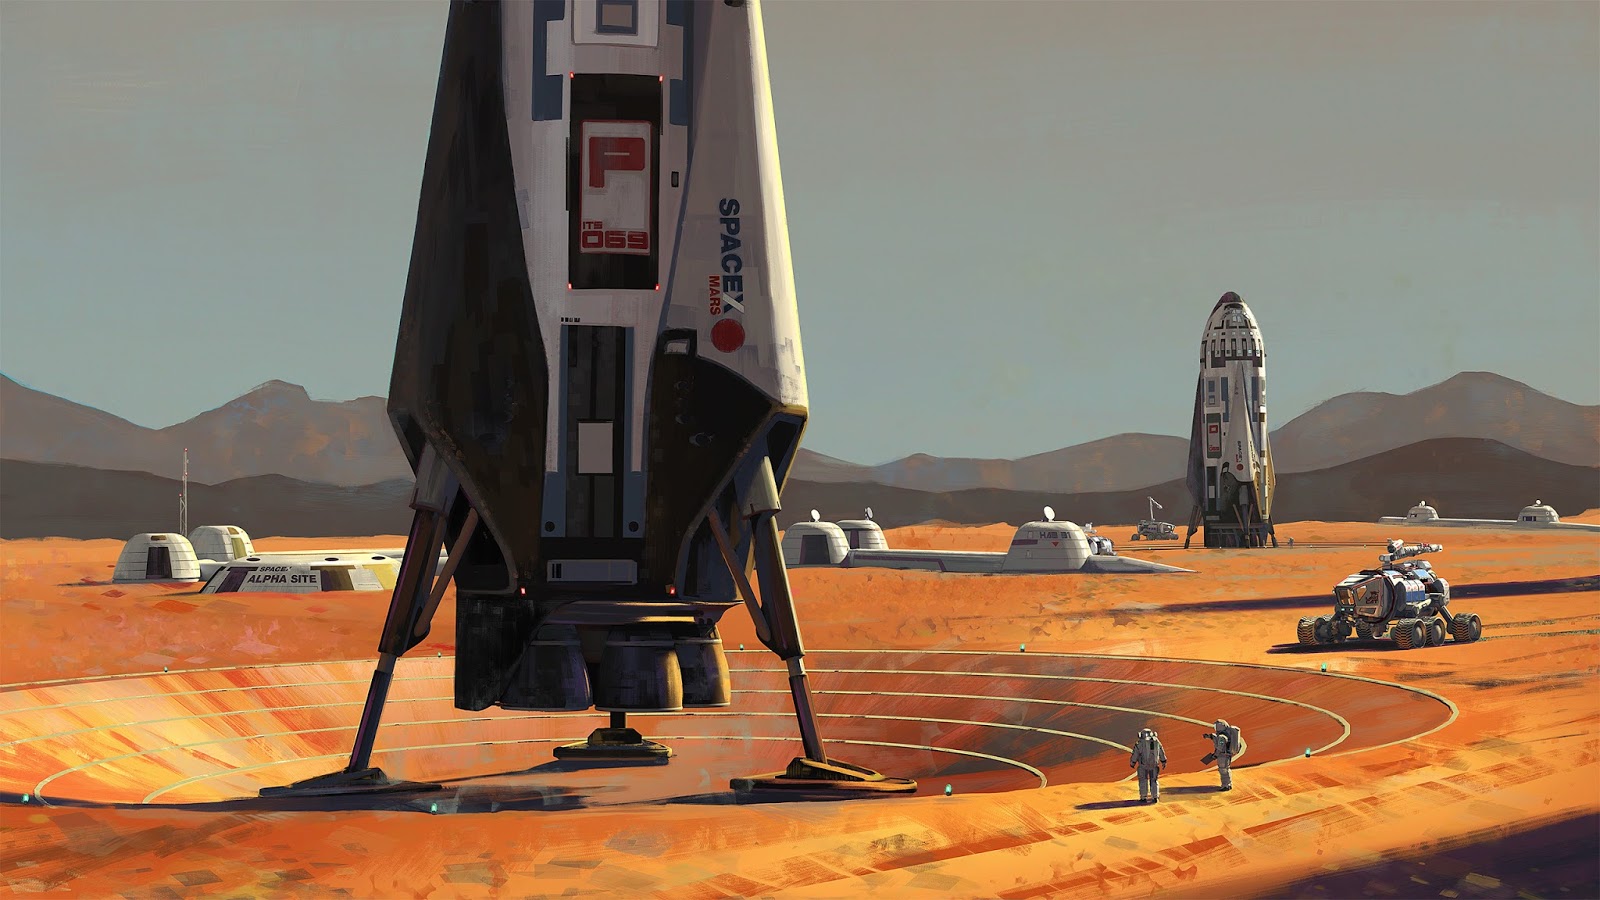 SpaceX ITS spaceships at Mars Base Alpha by Maciej Rebisz